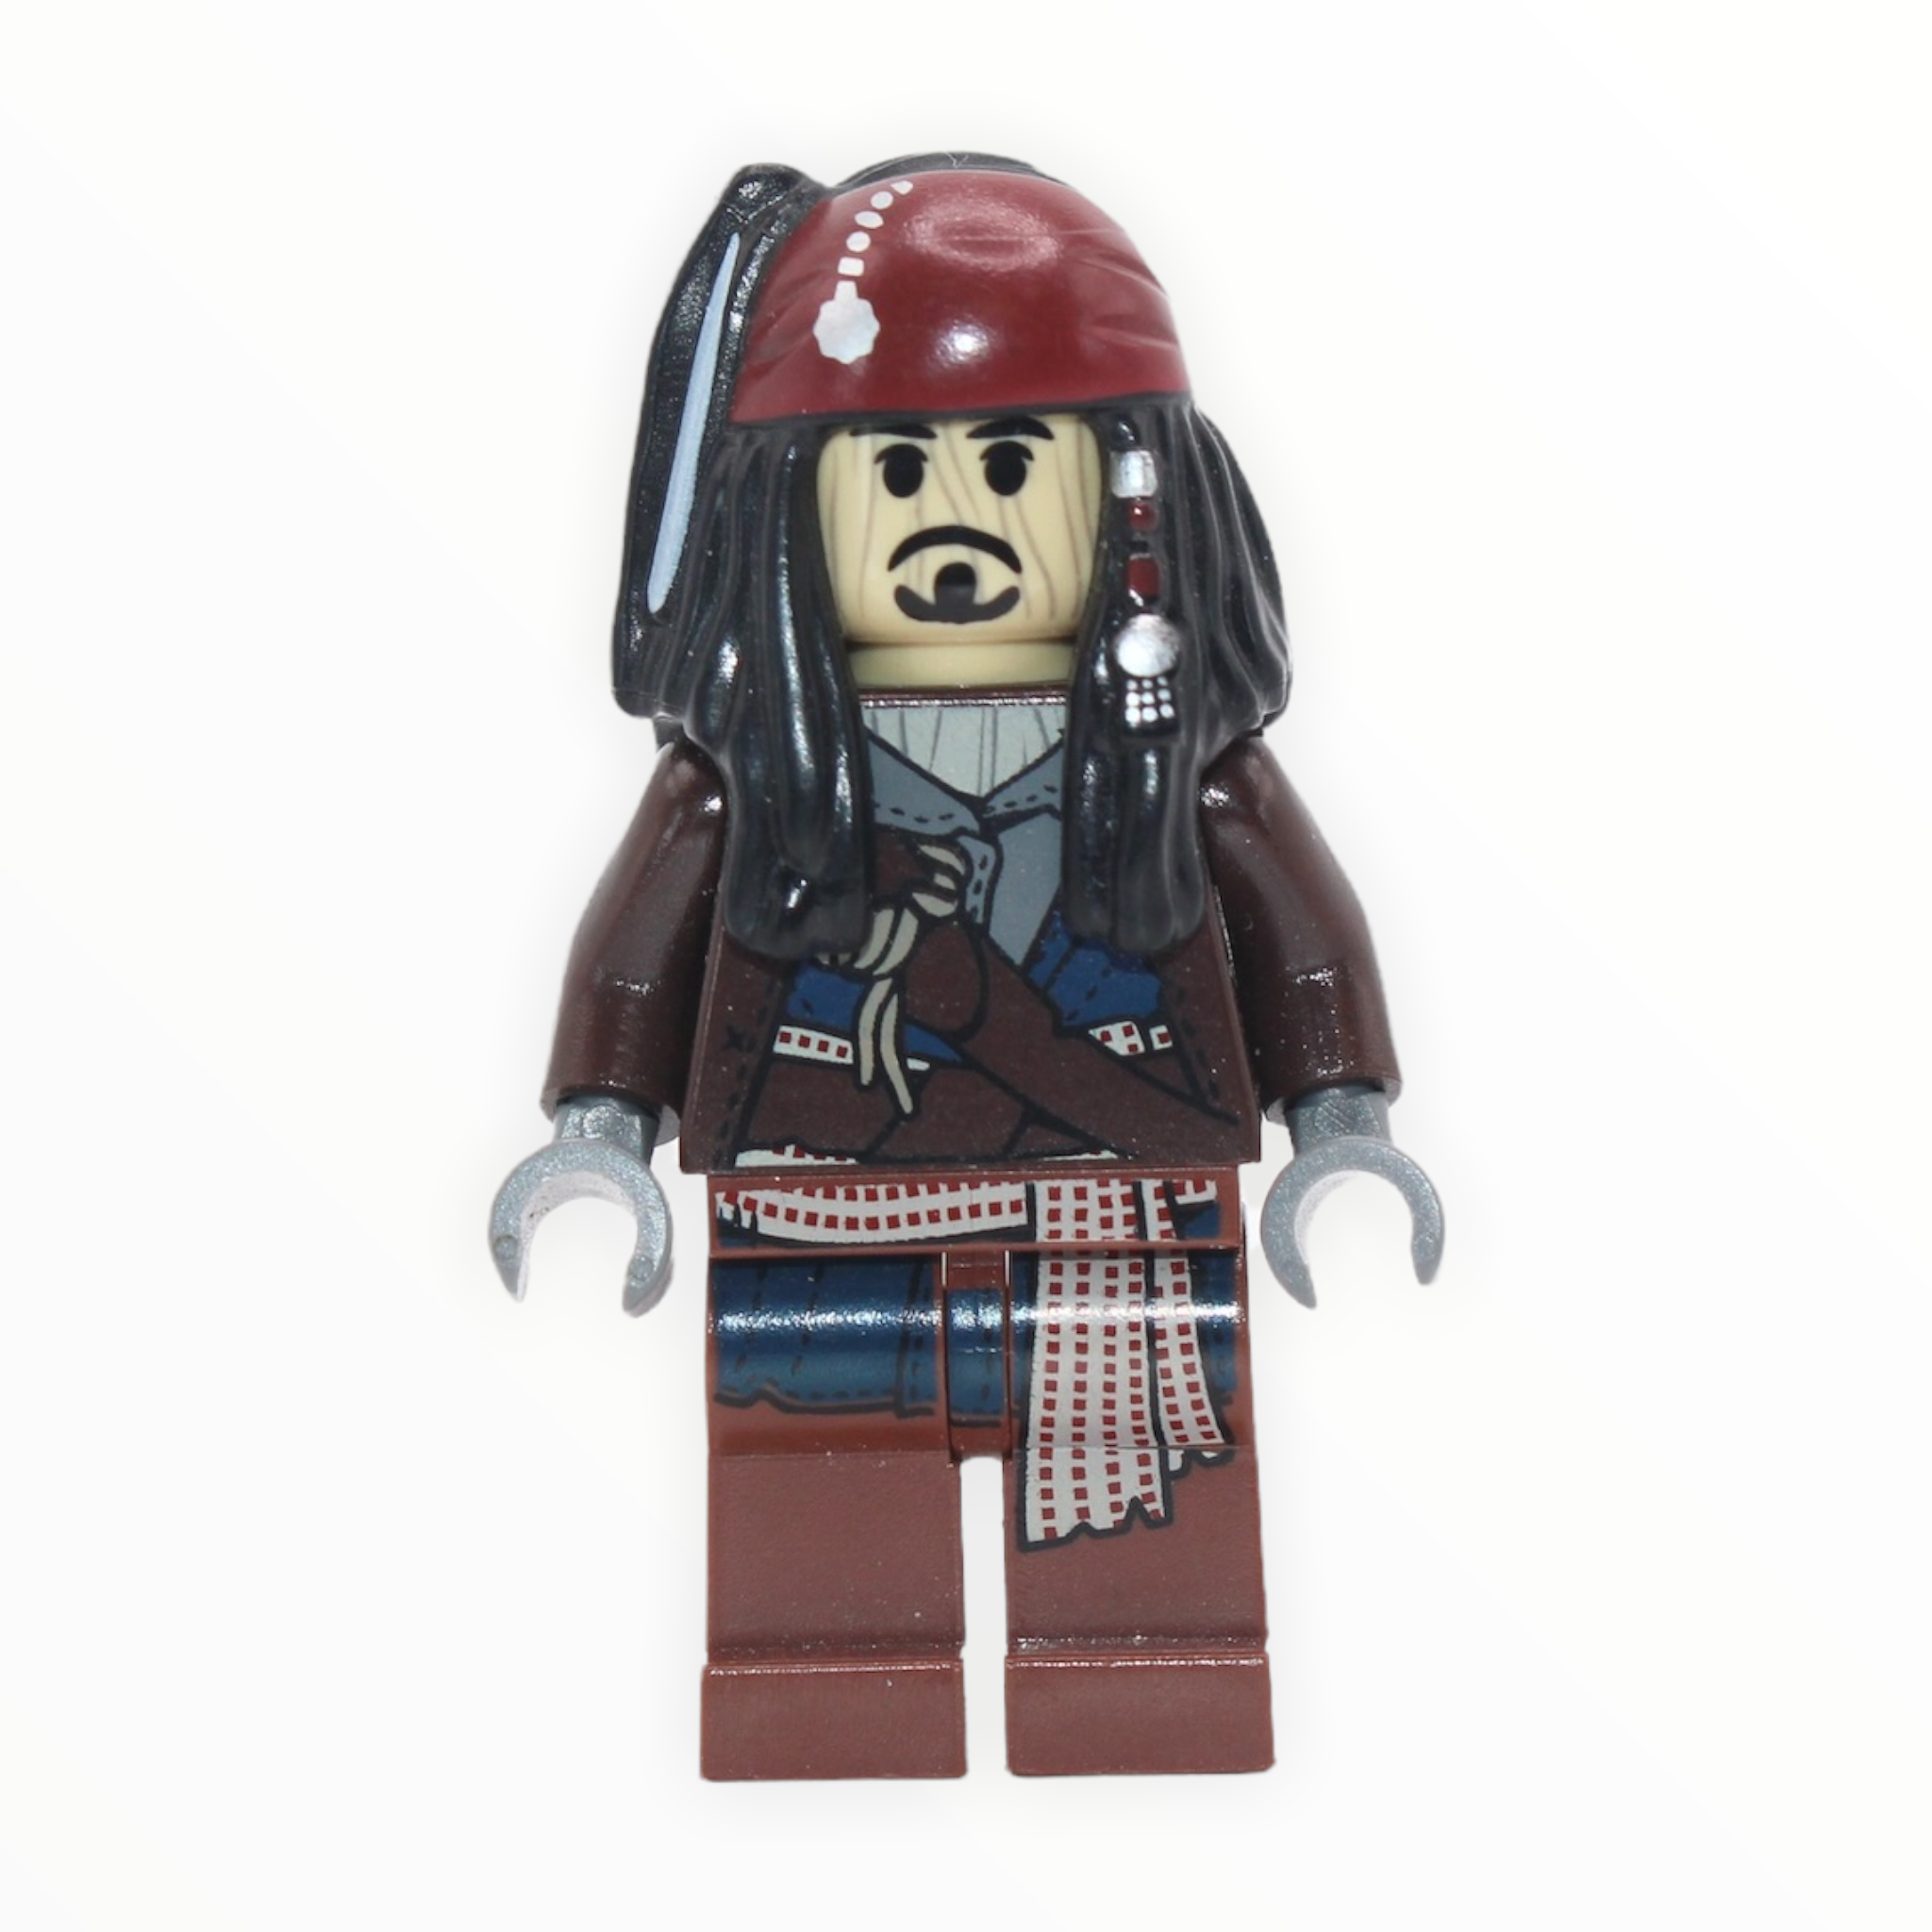 Voodoo Captain Jack Sparrow